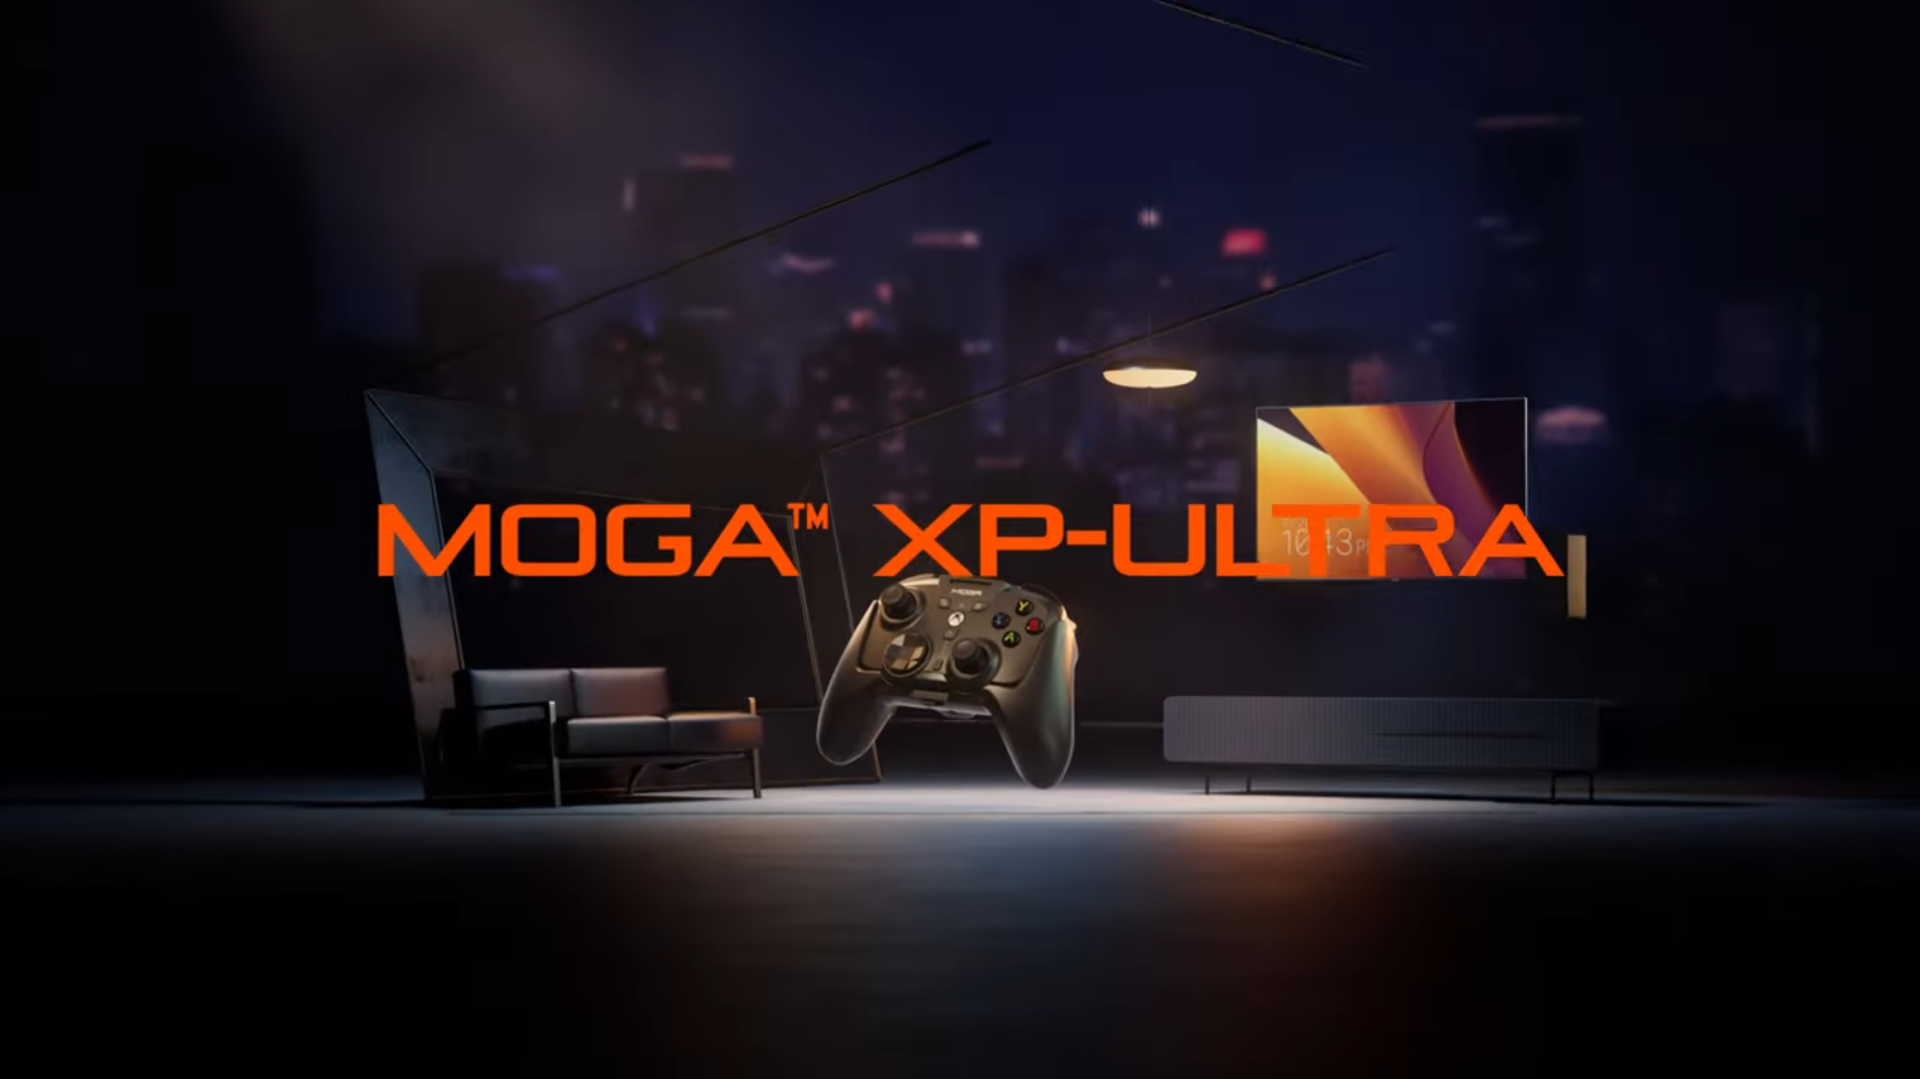 MOGA XP-ULTRA